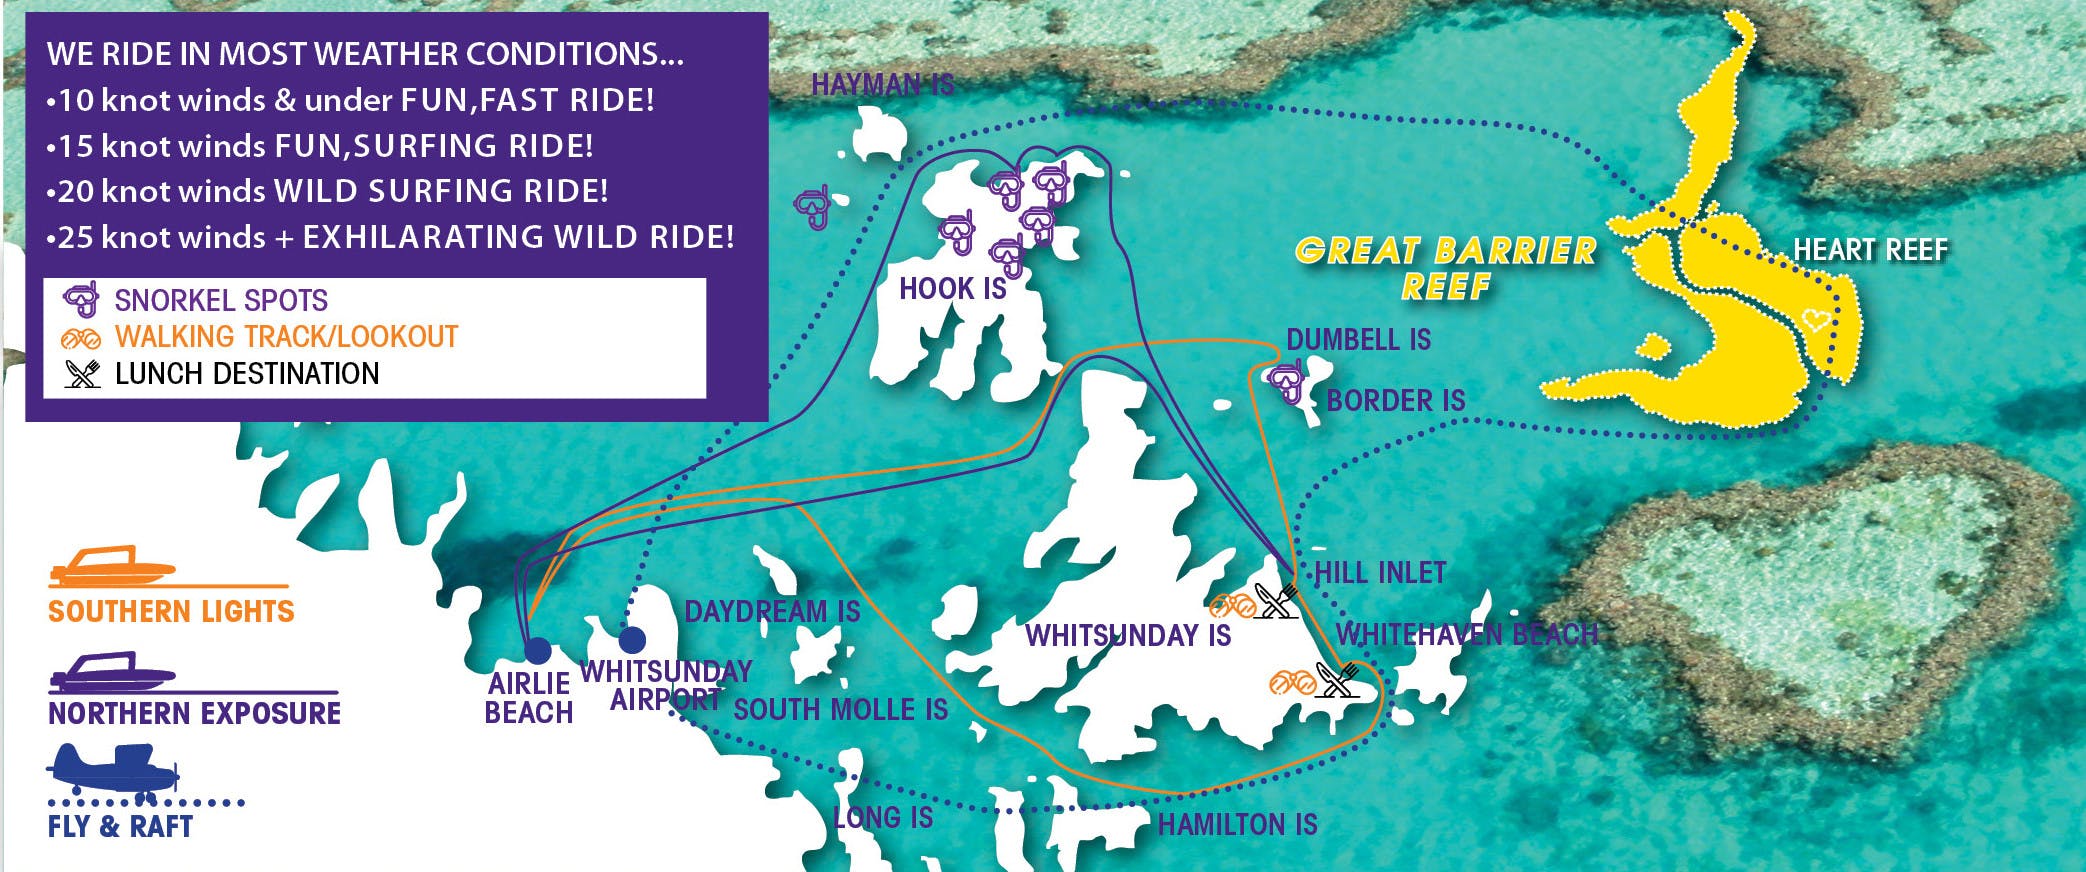 Ocean Rafting Tours Map.jpg